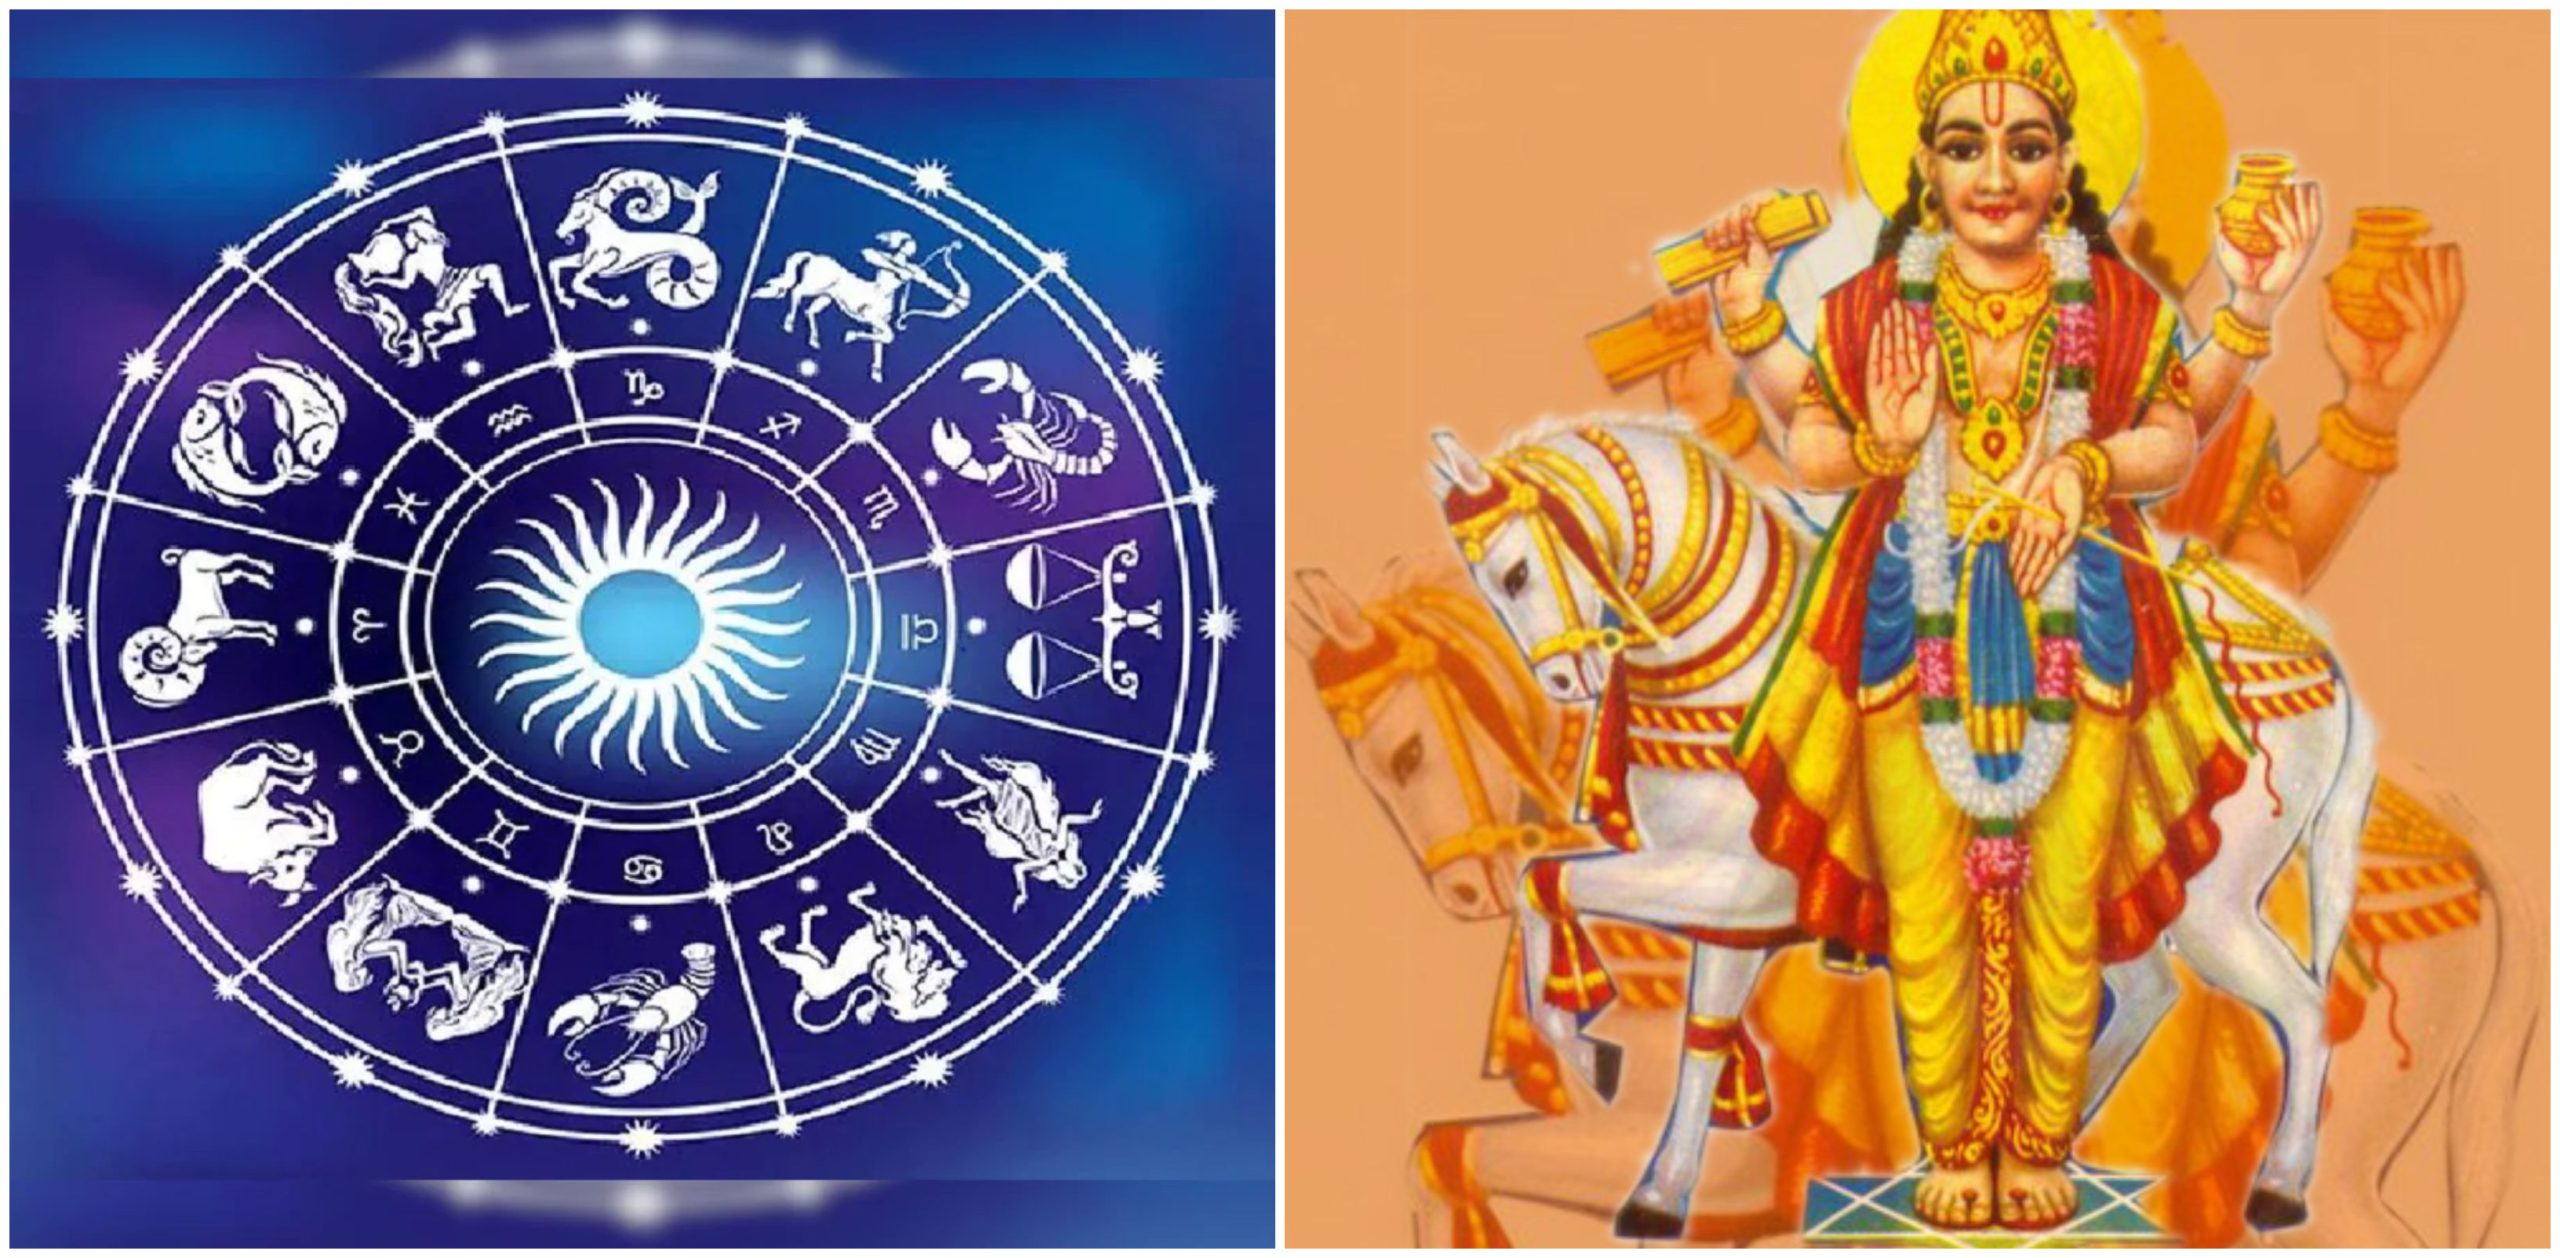 shukra deva horoscope astro scaled | Horoscope: ಈ ರಾಶಿಗಳಿಗೆ ಸೋಲೇ ಬರದಂತೆ ತಡೆಯಲಿದ್ದಾನೆ ಶುಕ್ರ- ಇನ್ನು ಮುಂದೆ ಇವರನ್ನು ಟಚ್ ಮಾಡೋಕೆ ಕೂಡ ಆಗಲ್ಲ.